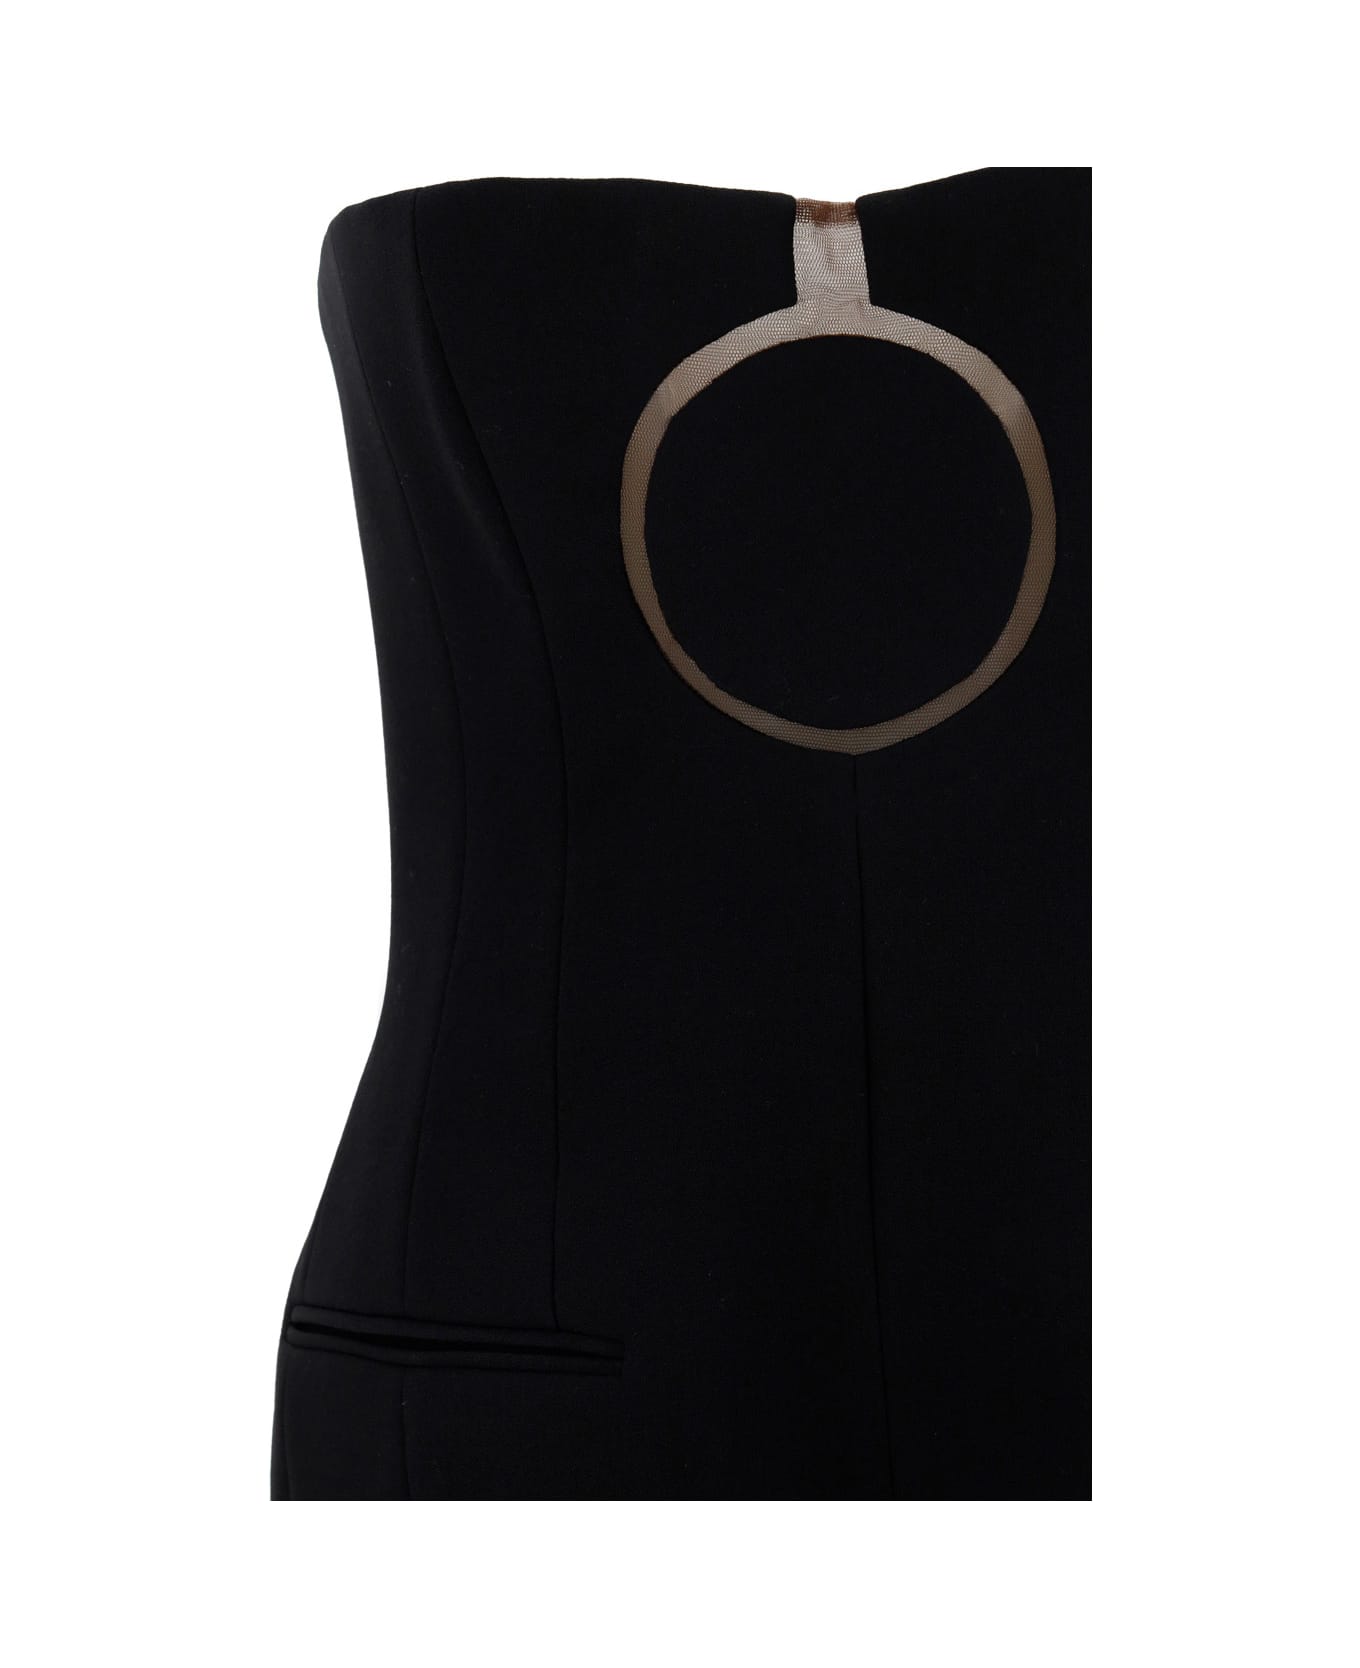 Ferragamo Mini Dress - Black